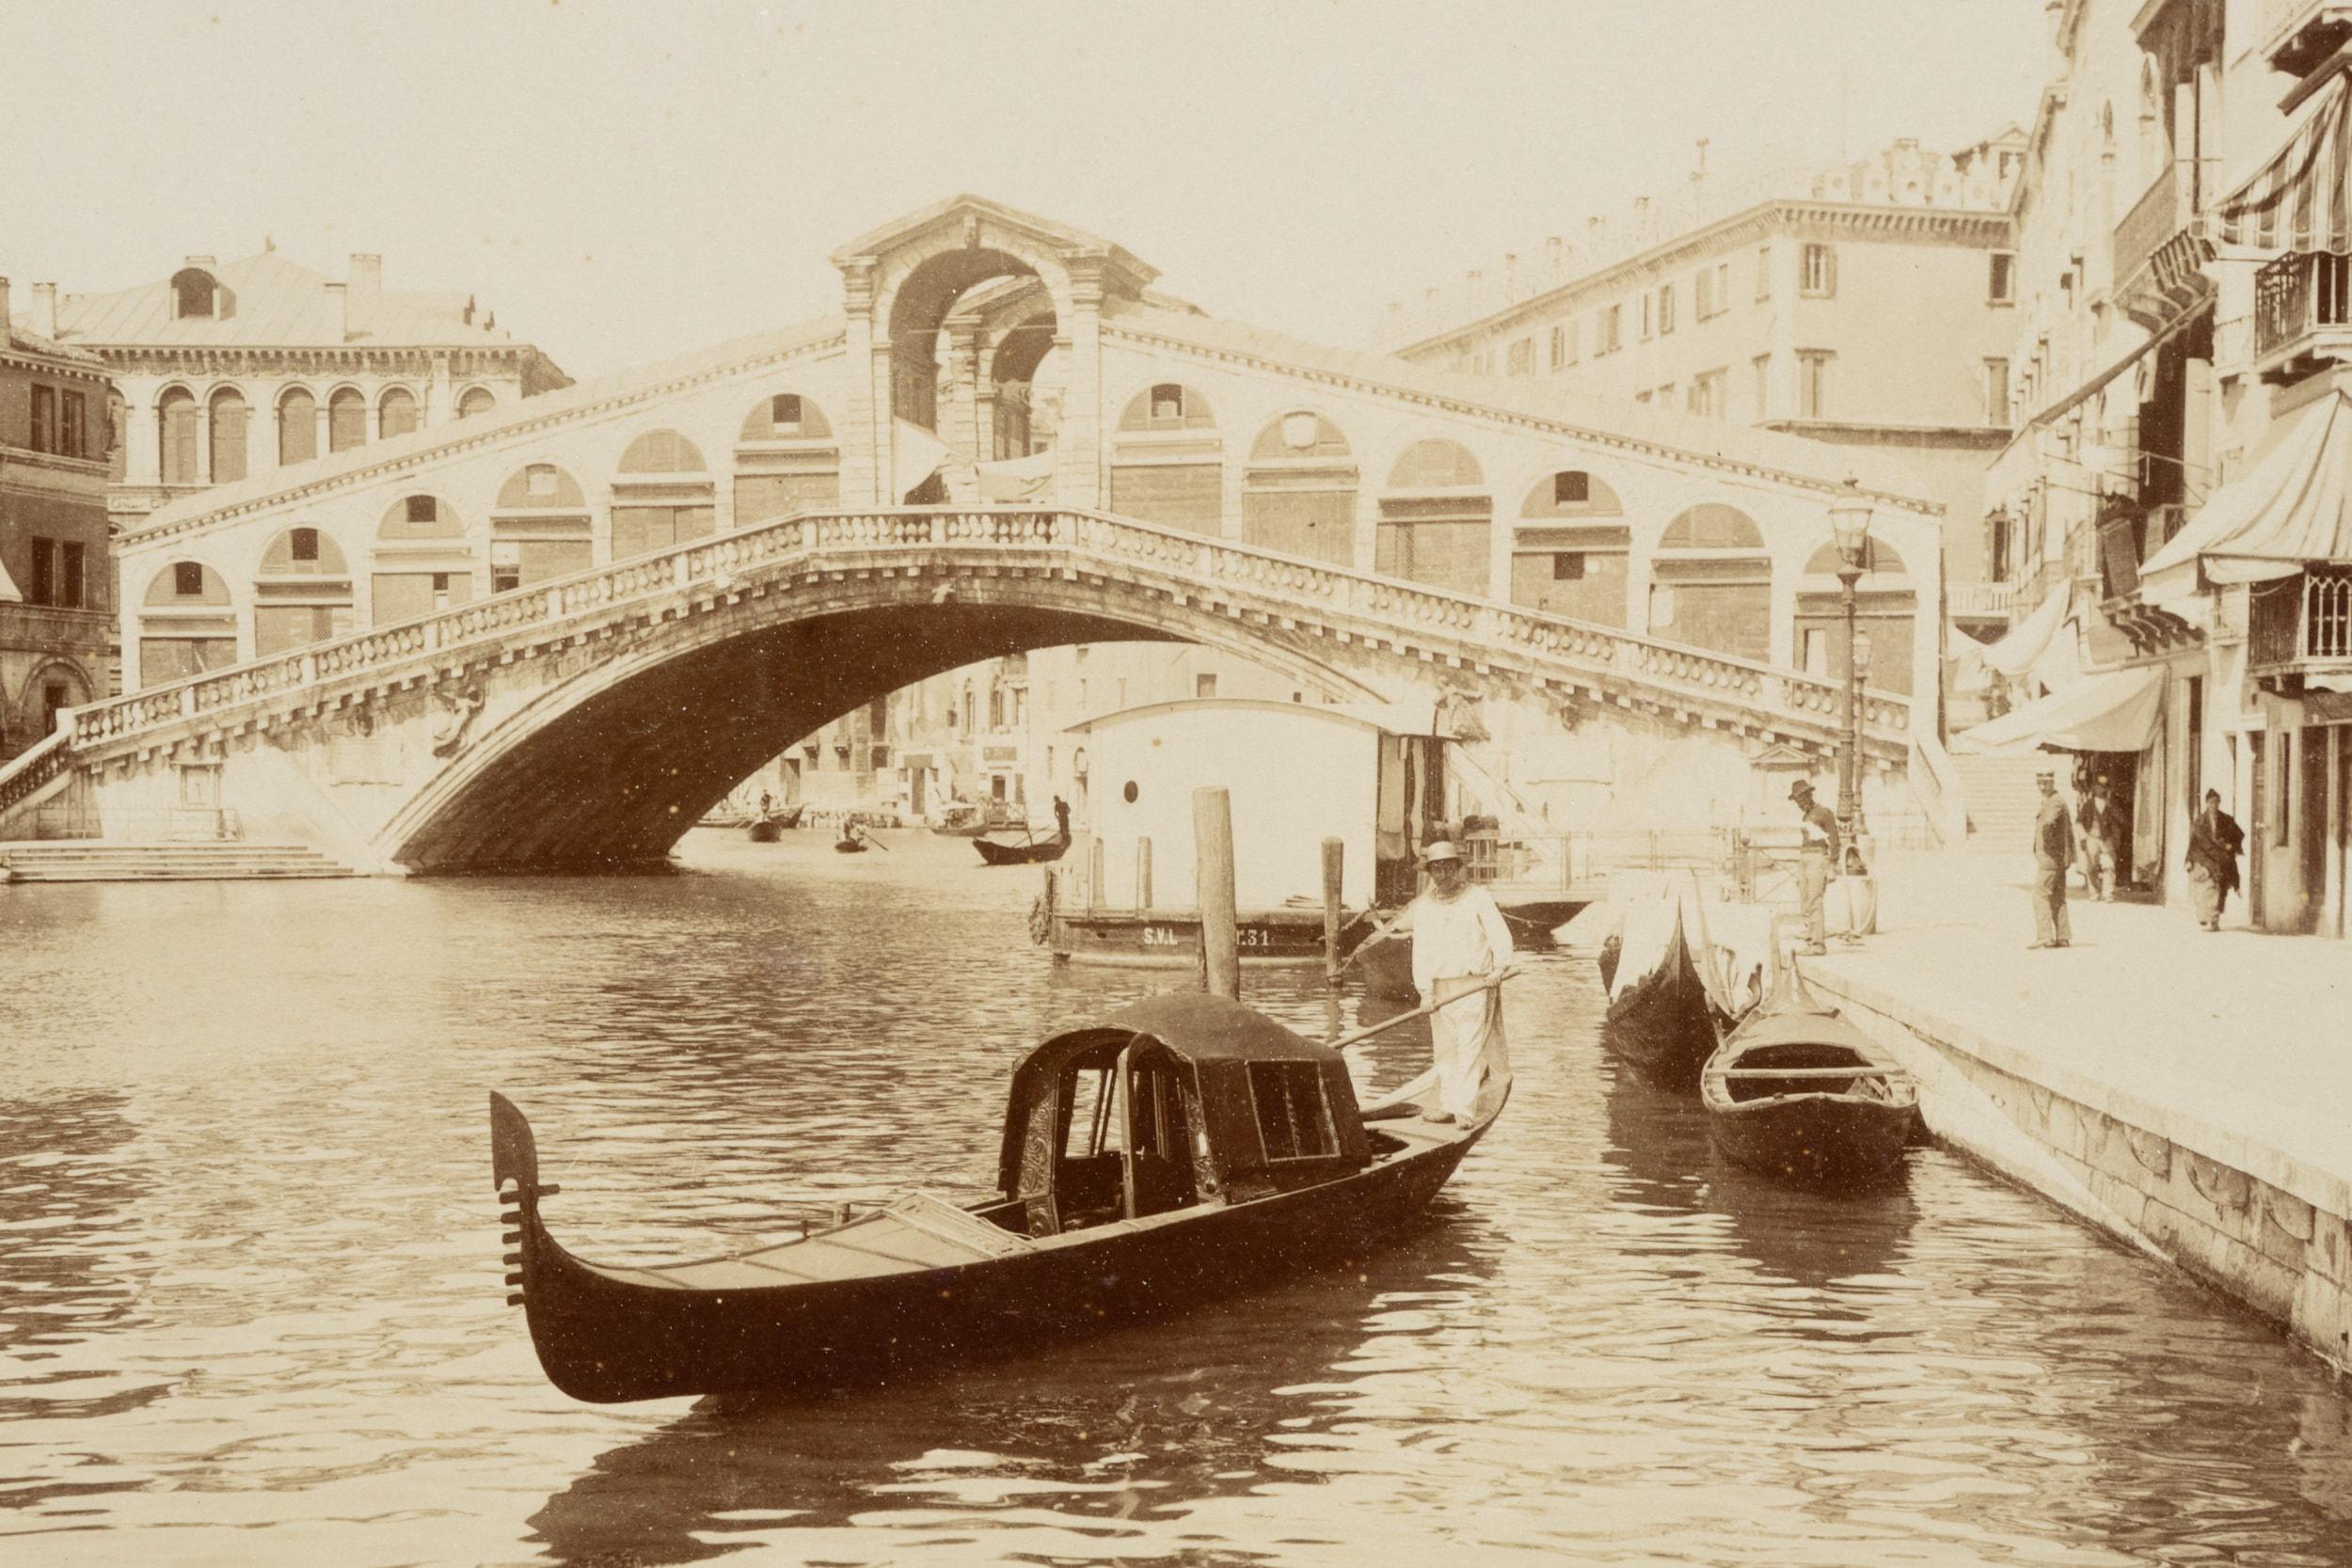 Rialto Bridge, Venice - Photograph by Carlo Naya